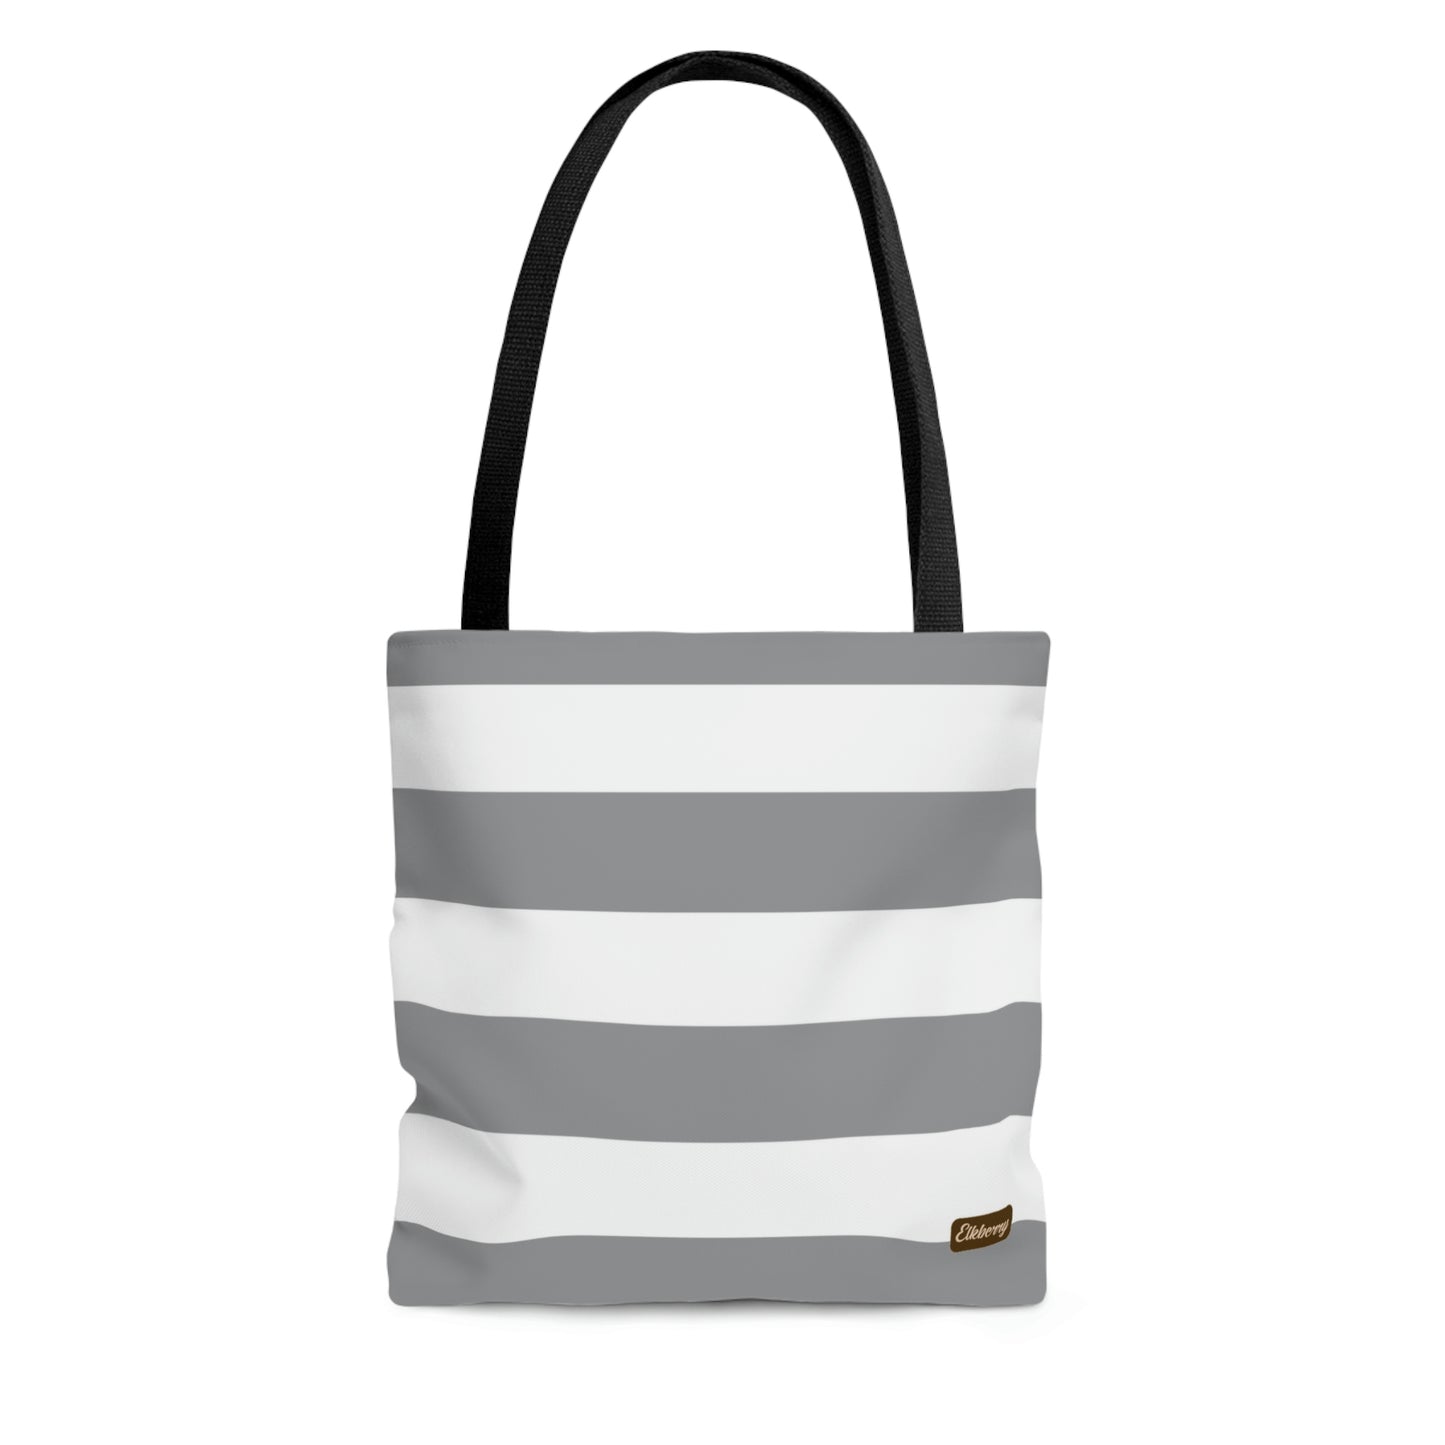 Lightweight Tote Bag - Ash Gray/White Stripes